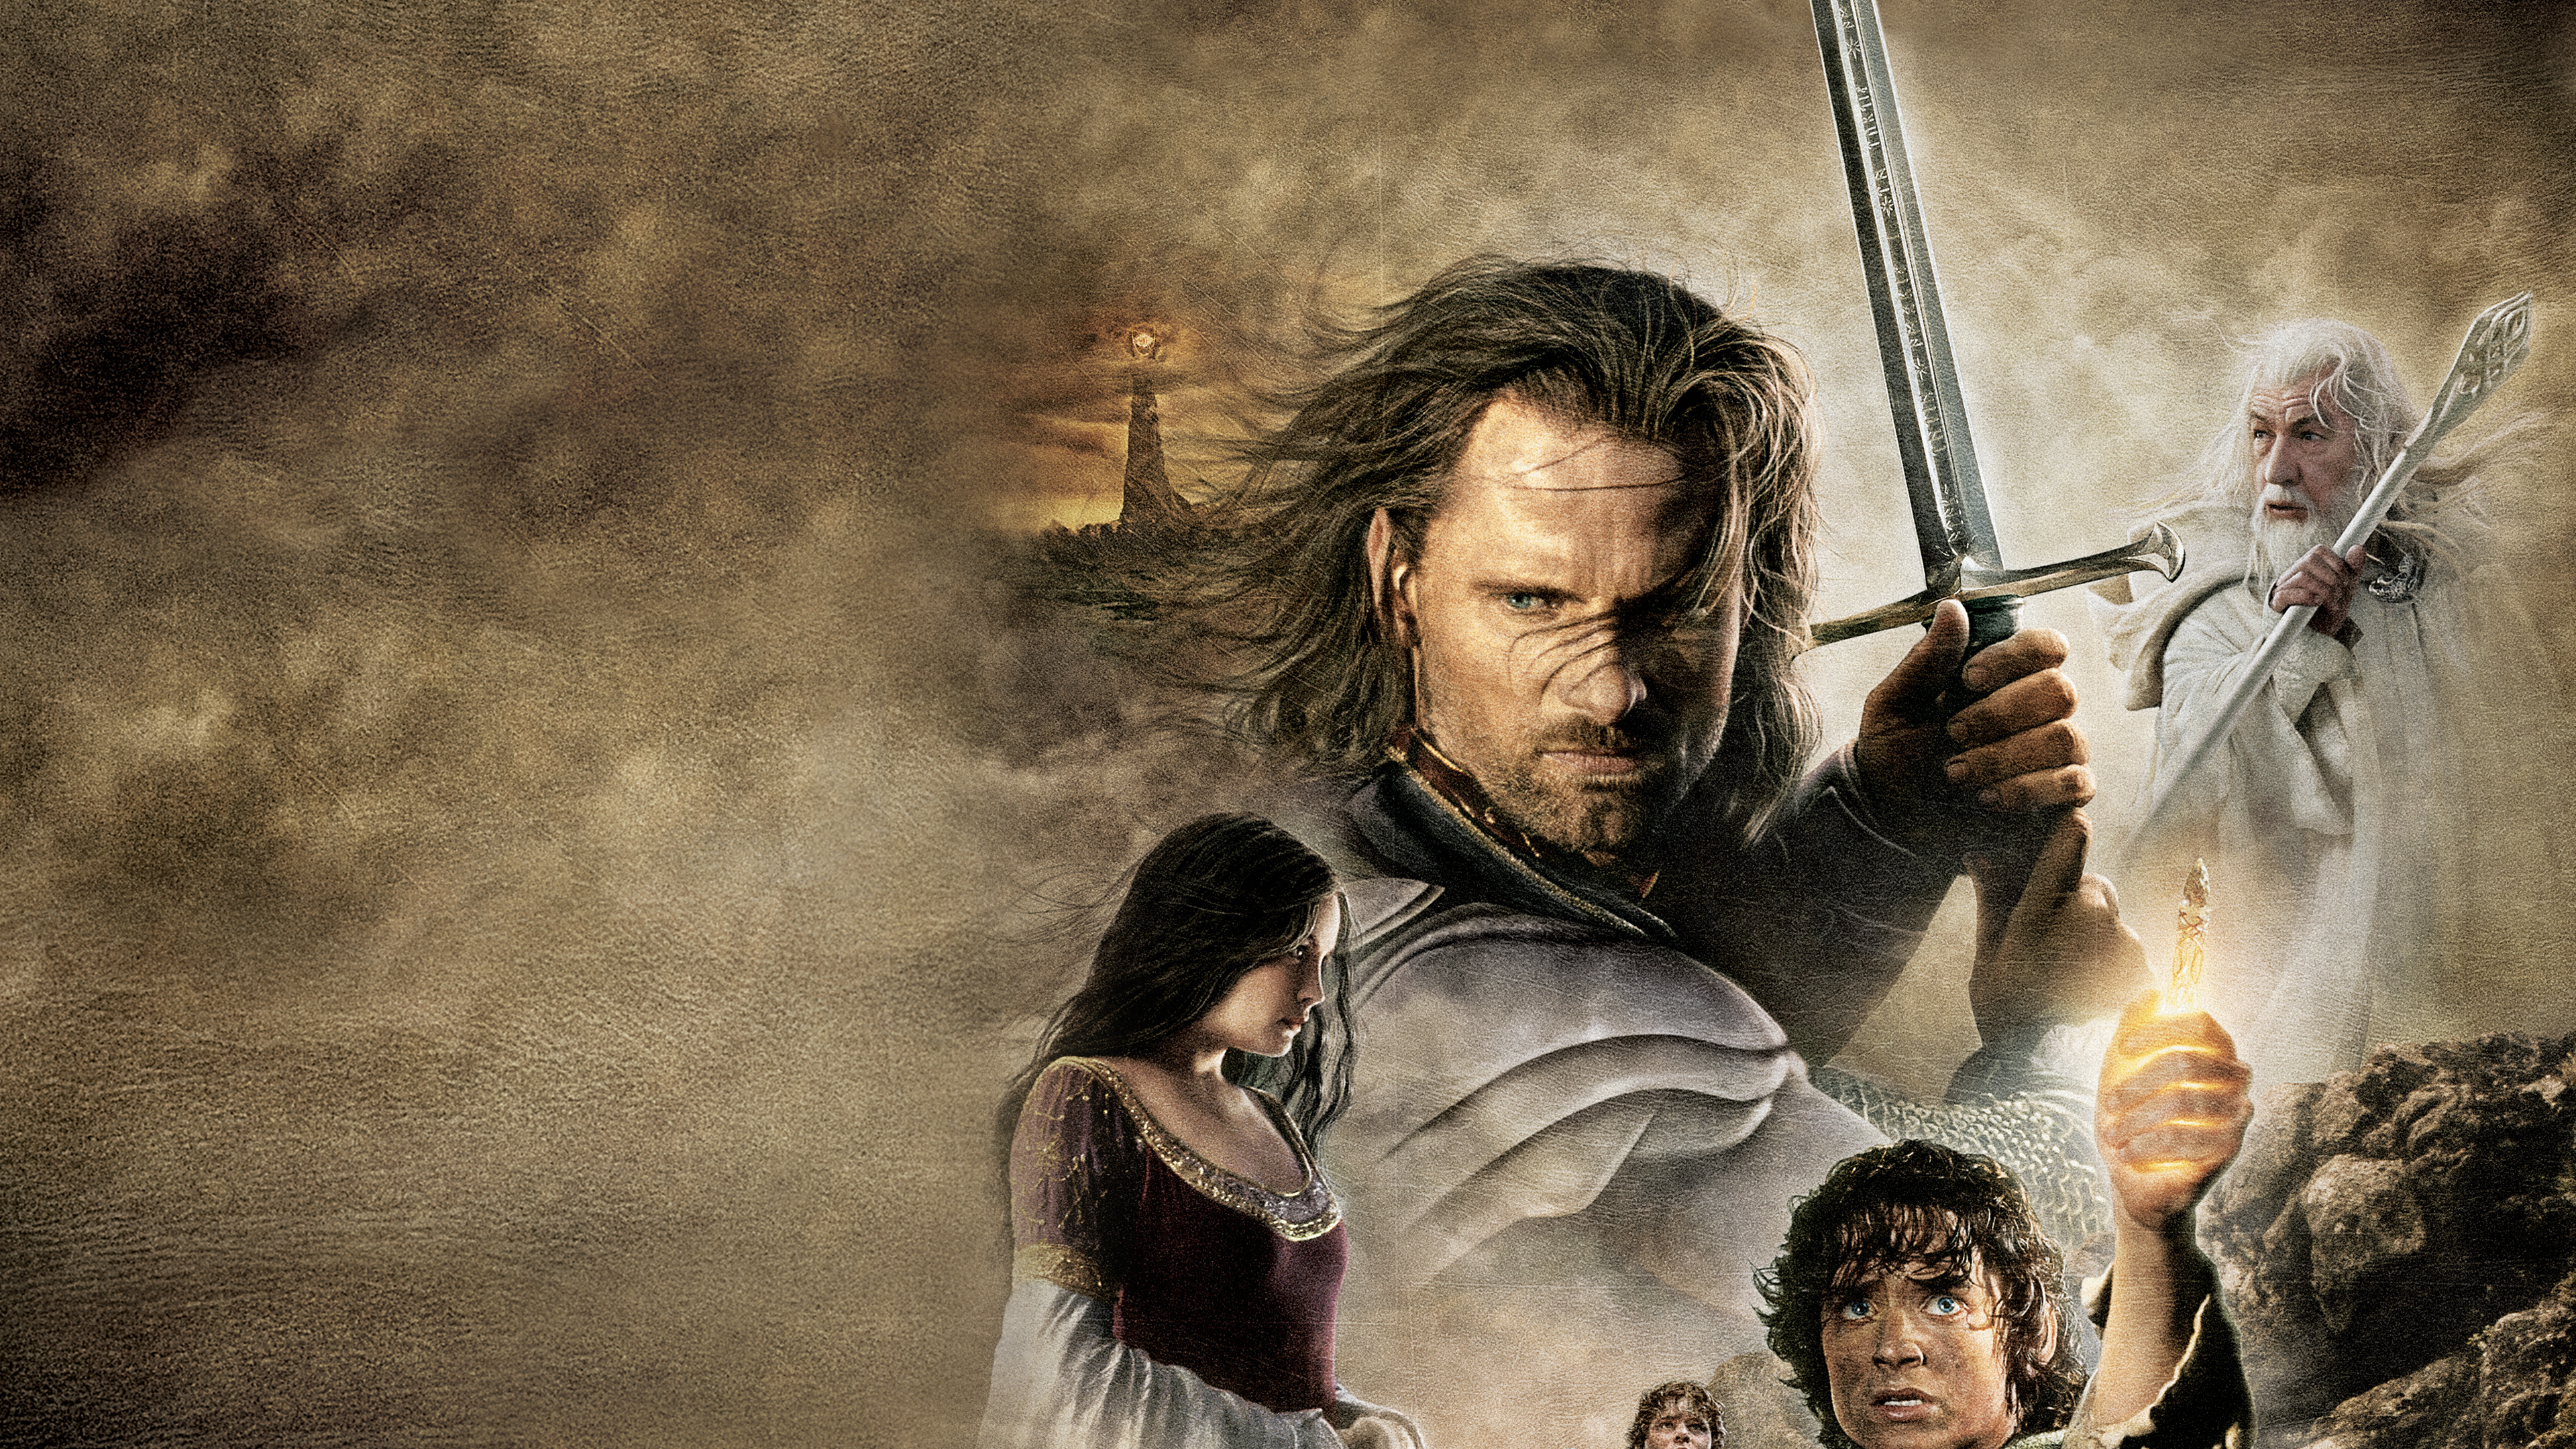 Aragorn, Ultra HD wallpaper, Background image, 3840x2160 4K Desktop